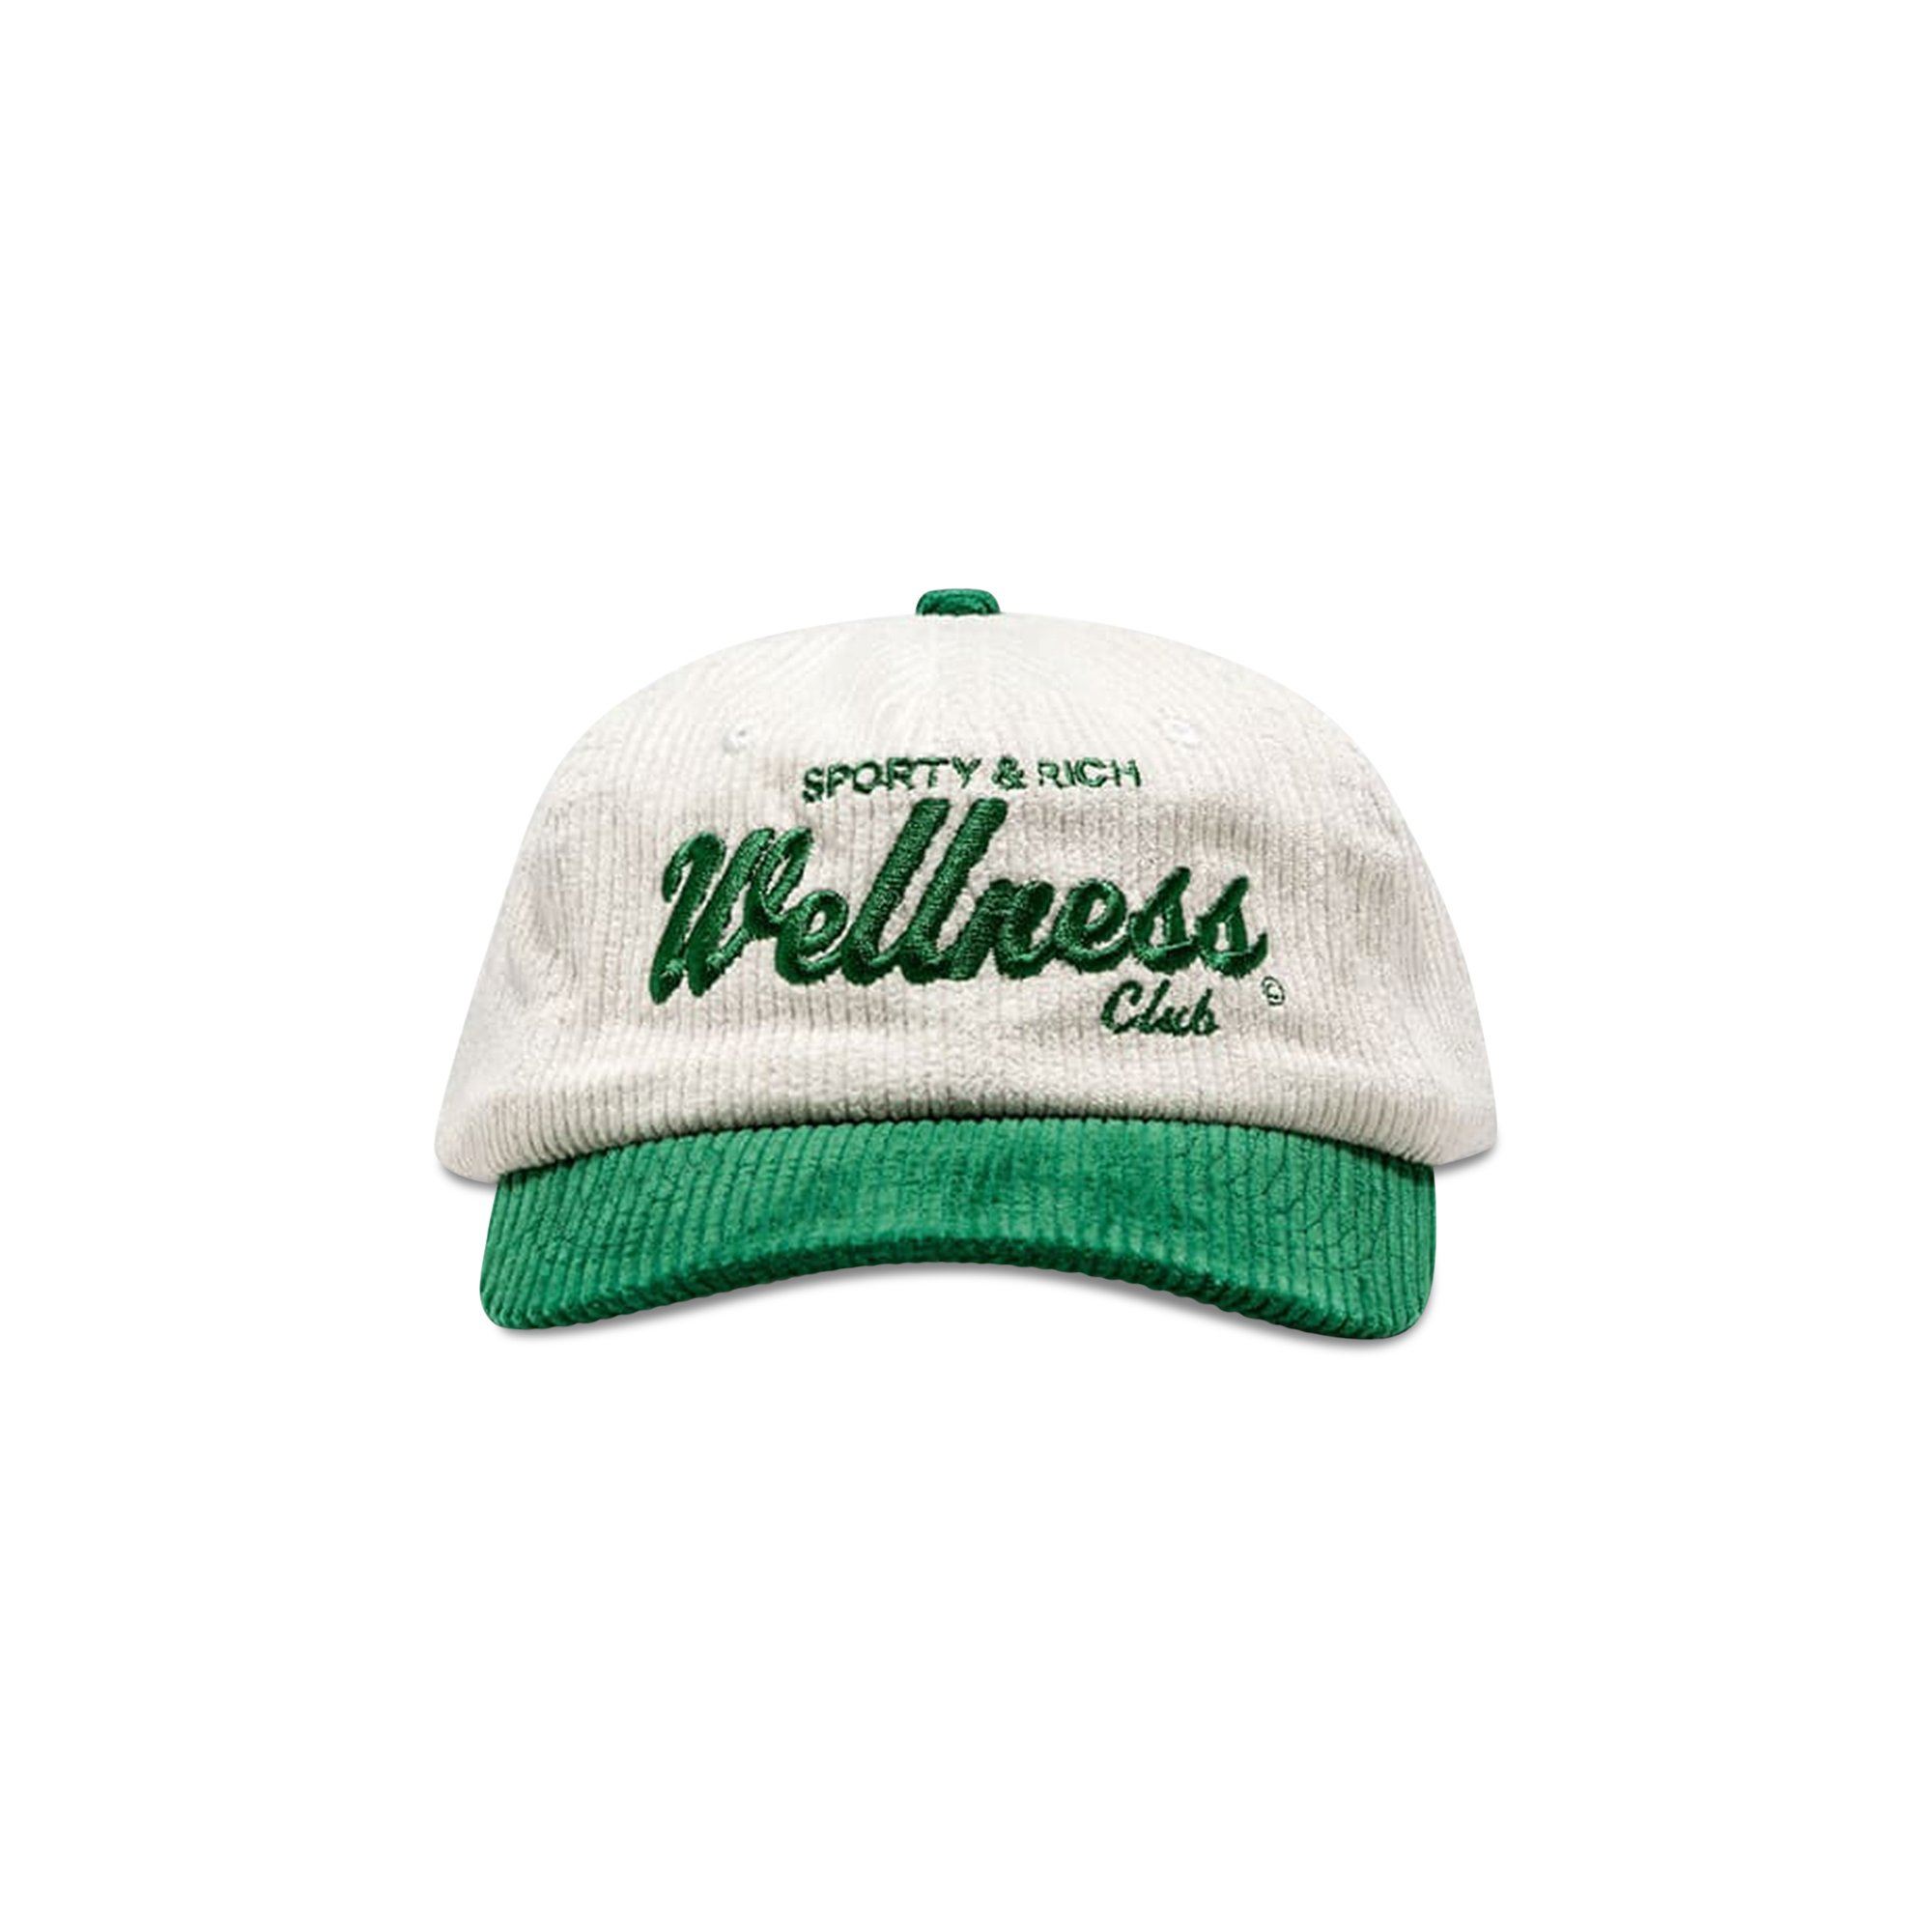 Buy Sporty & Rich Corduroy Wellness Club Hat 'White/Teal